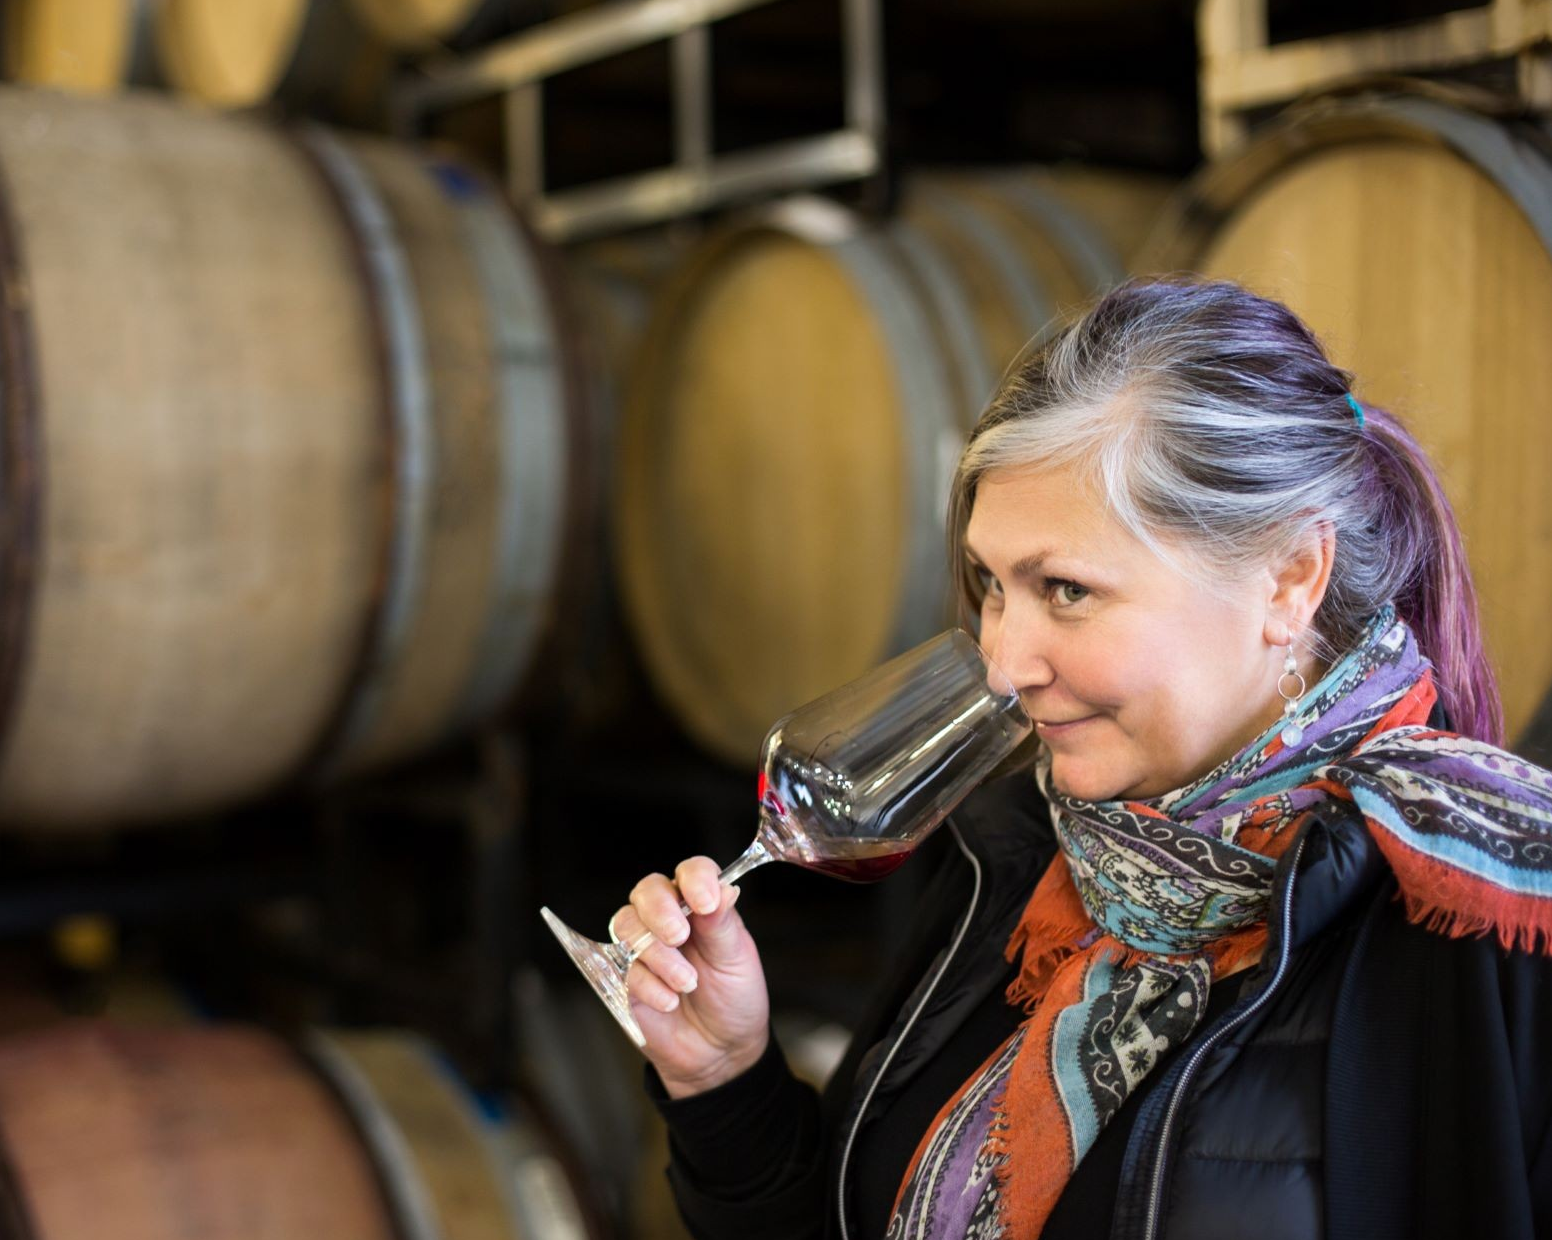 Meet Janet Dorozynski, Canada’s wine ambassador